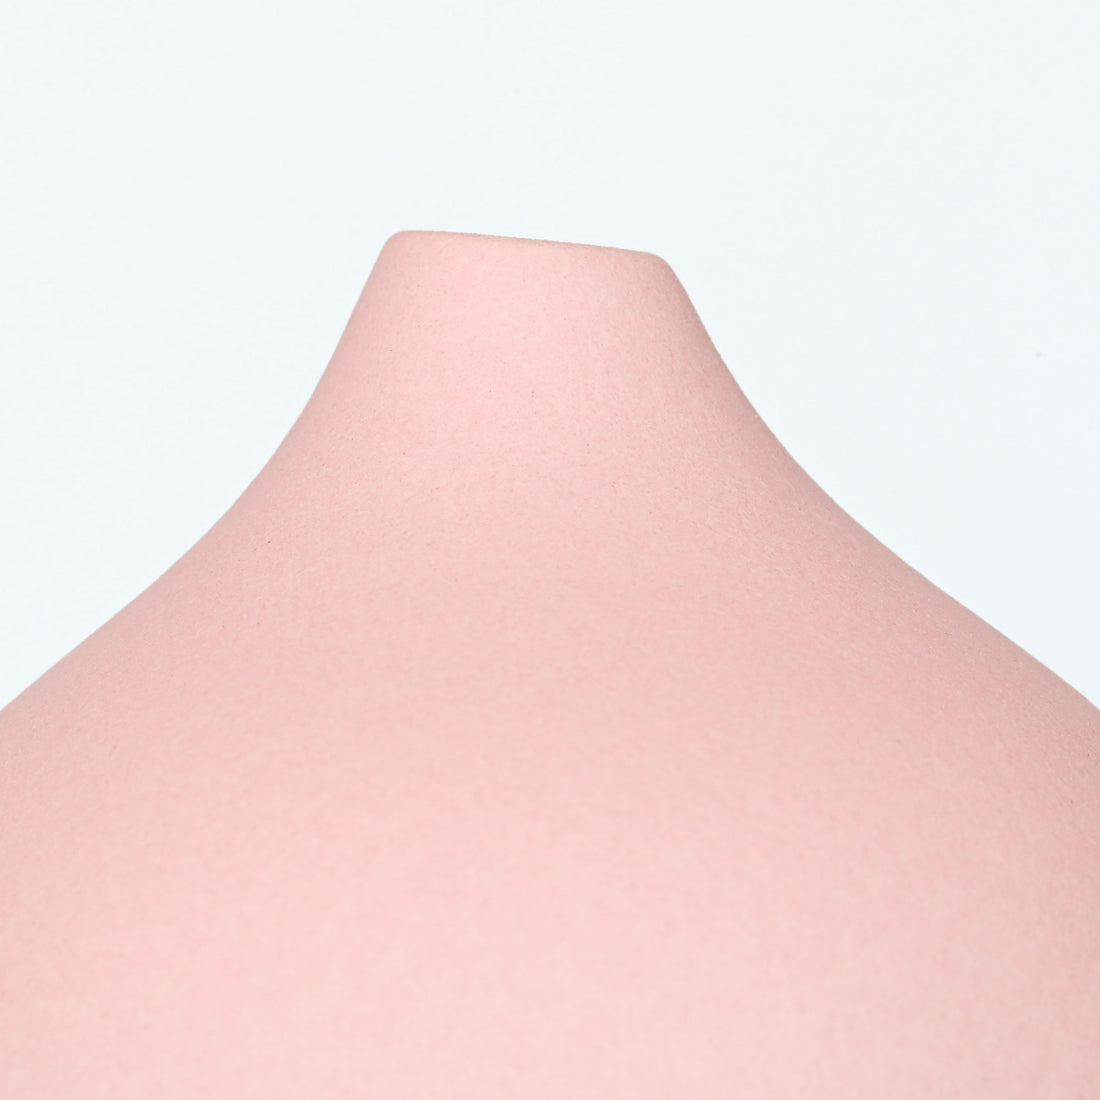 Marzou ceramic aroma diffuser Lotus Pink - close-up